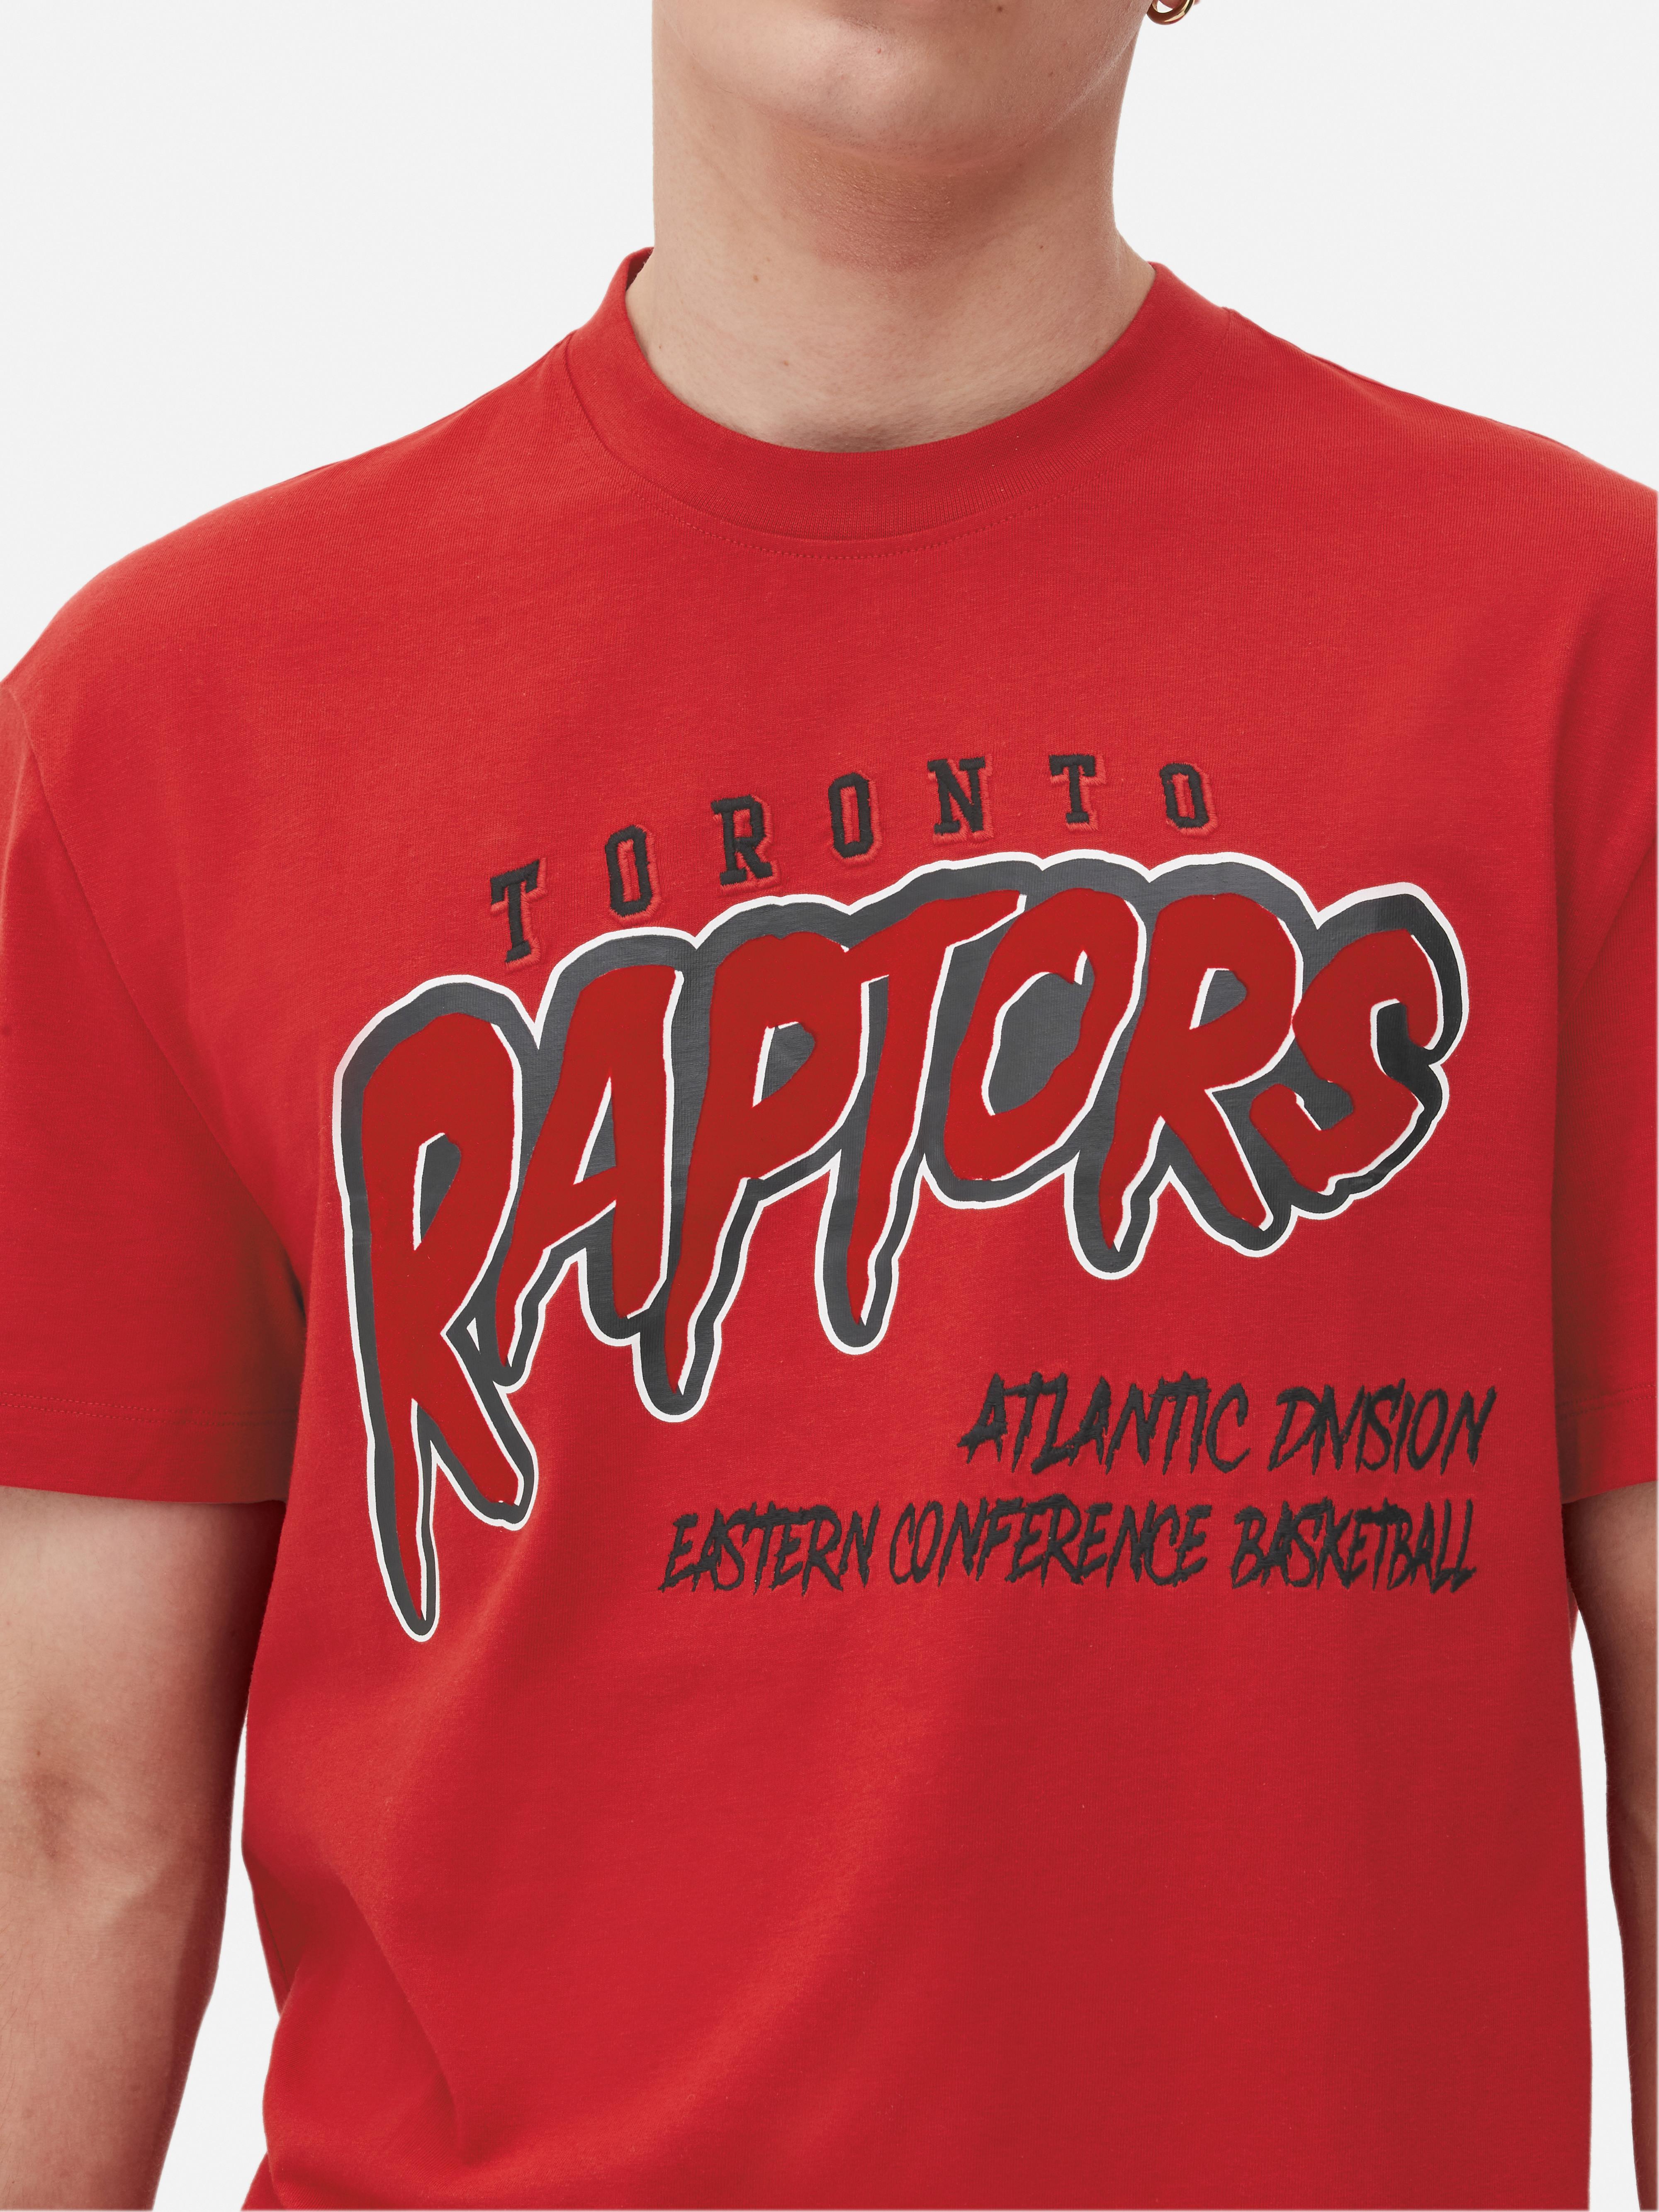 Raptors 905 | Graphic T-Shirt